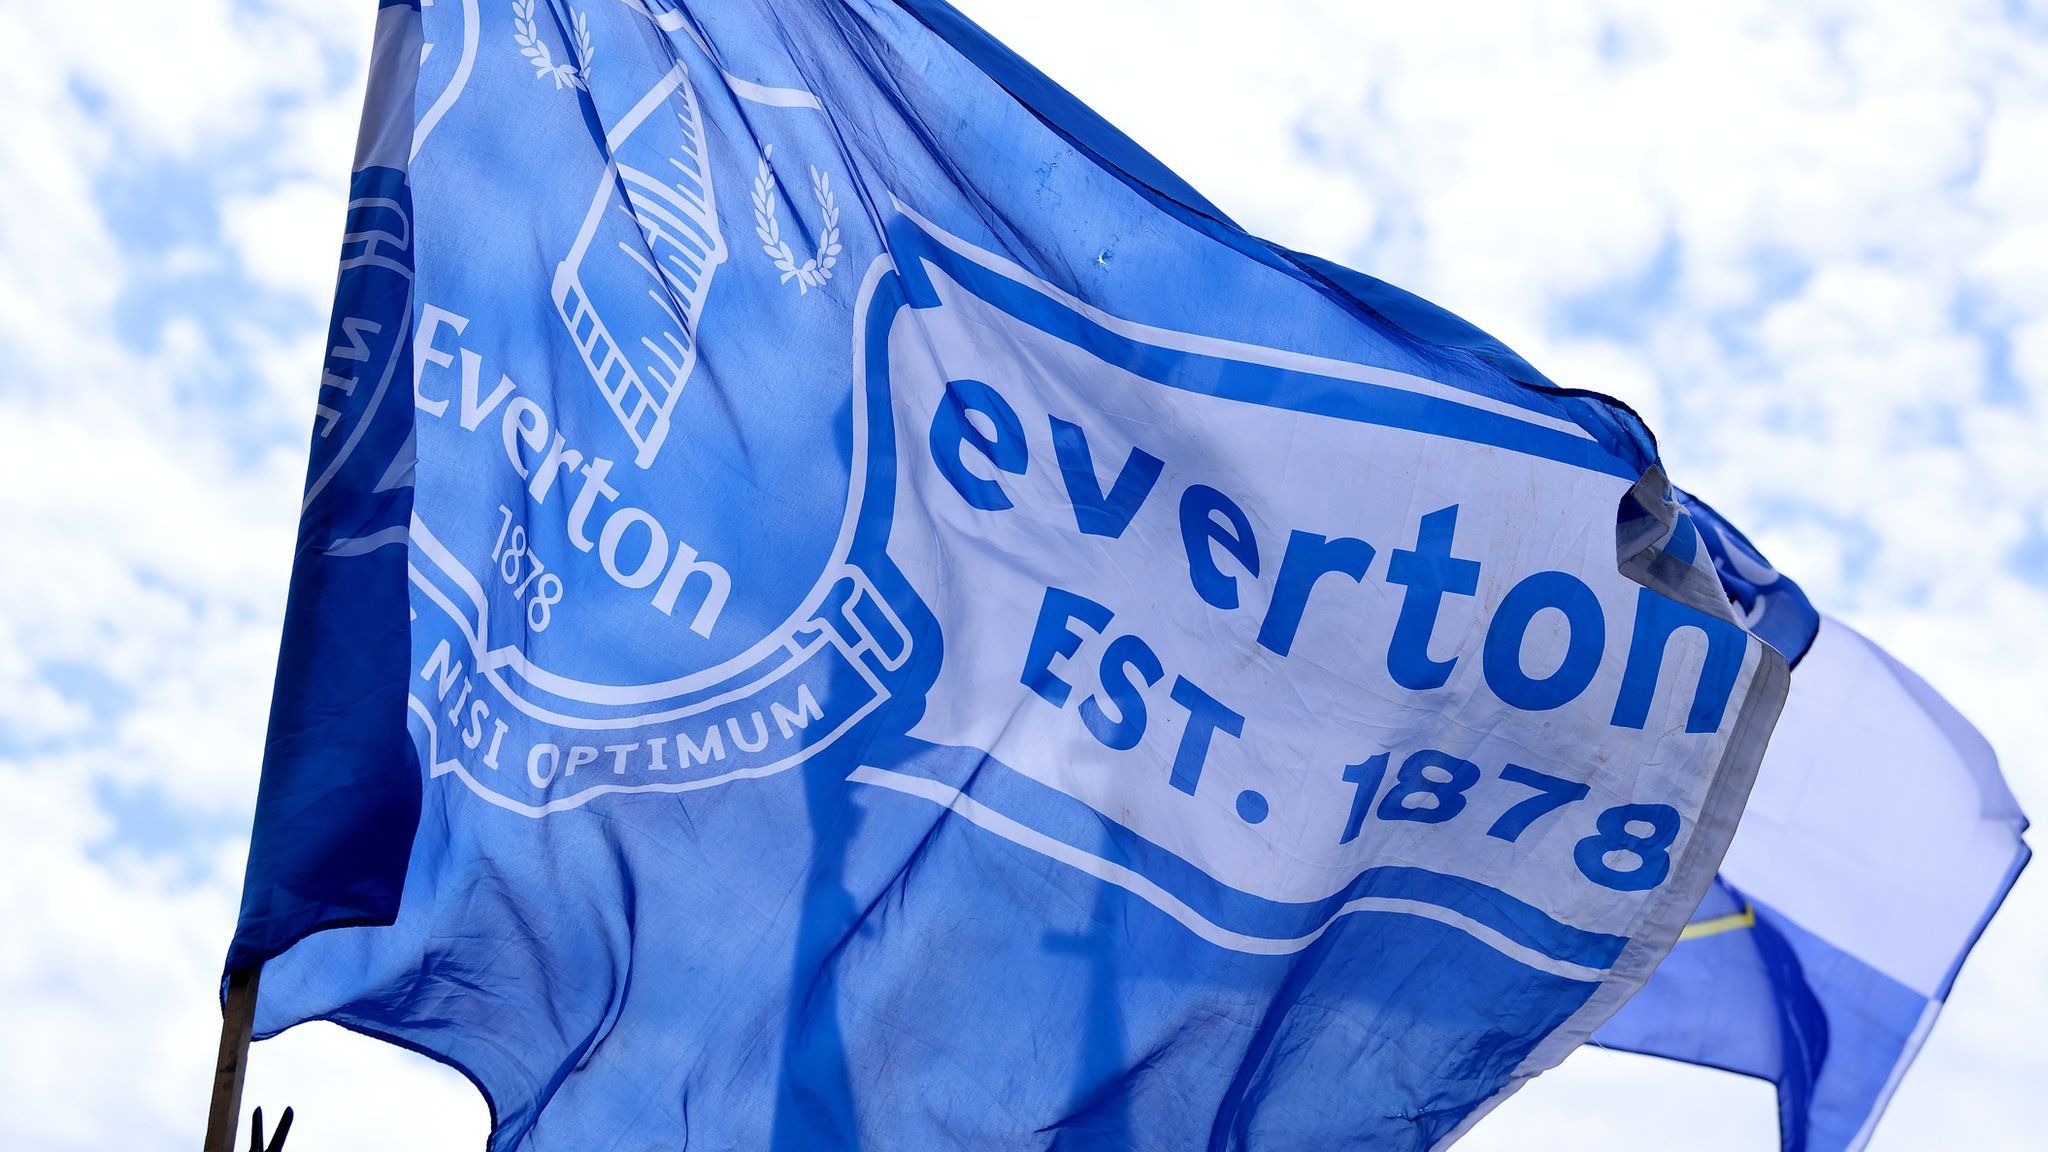 An Everton flag